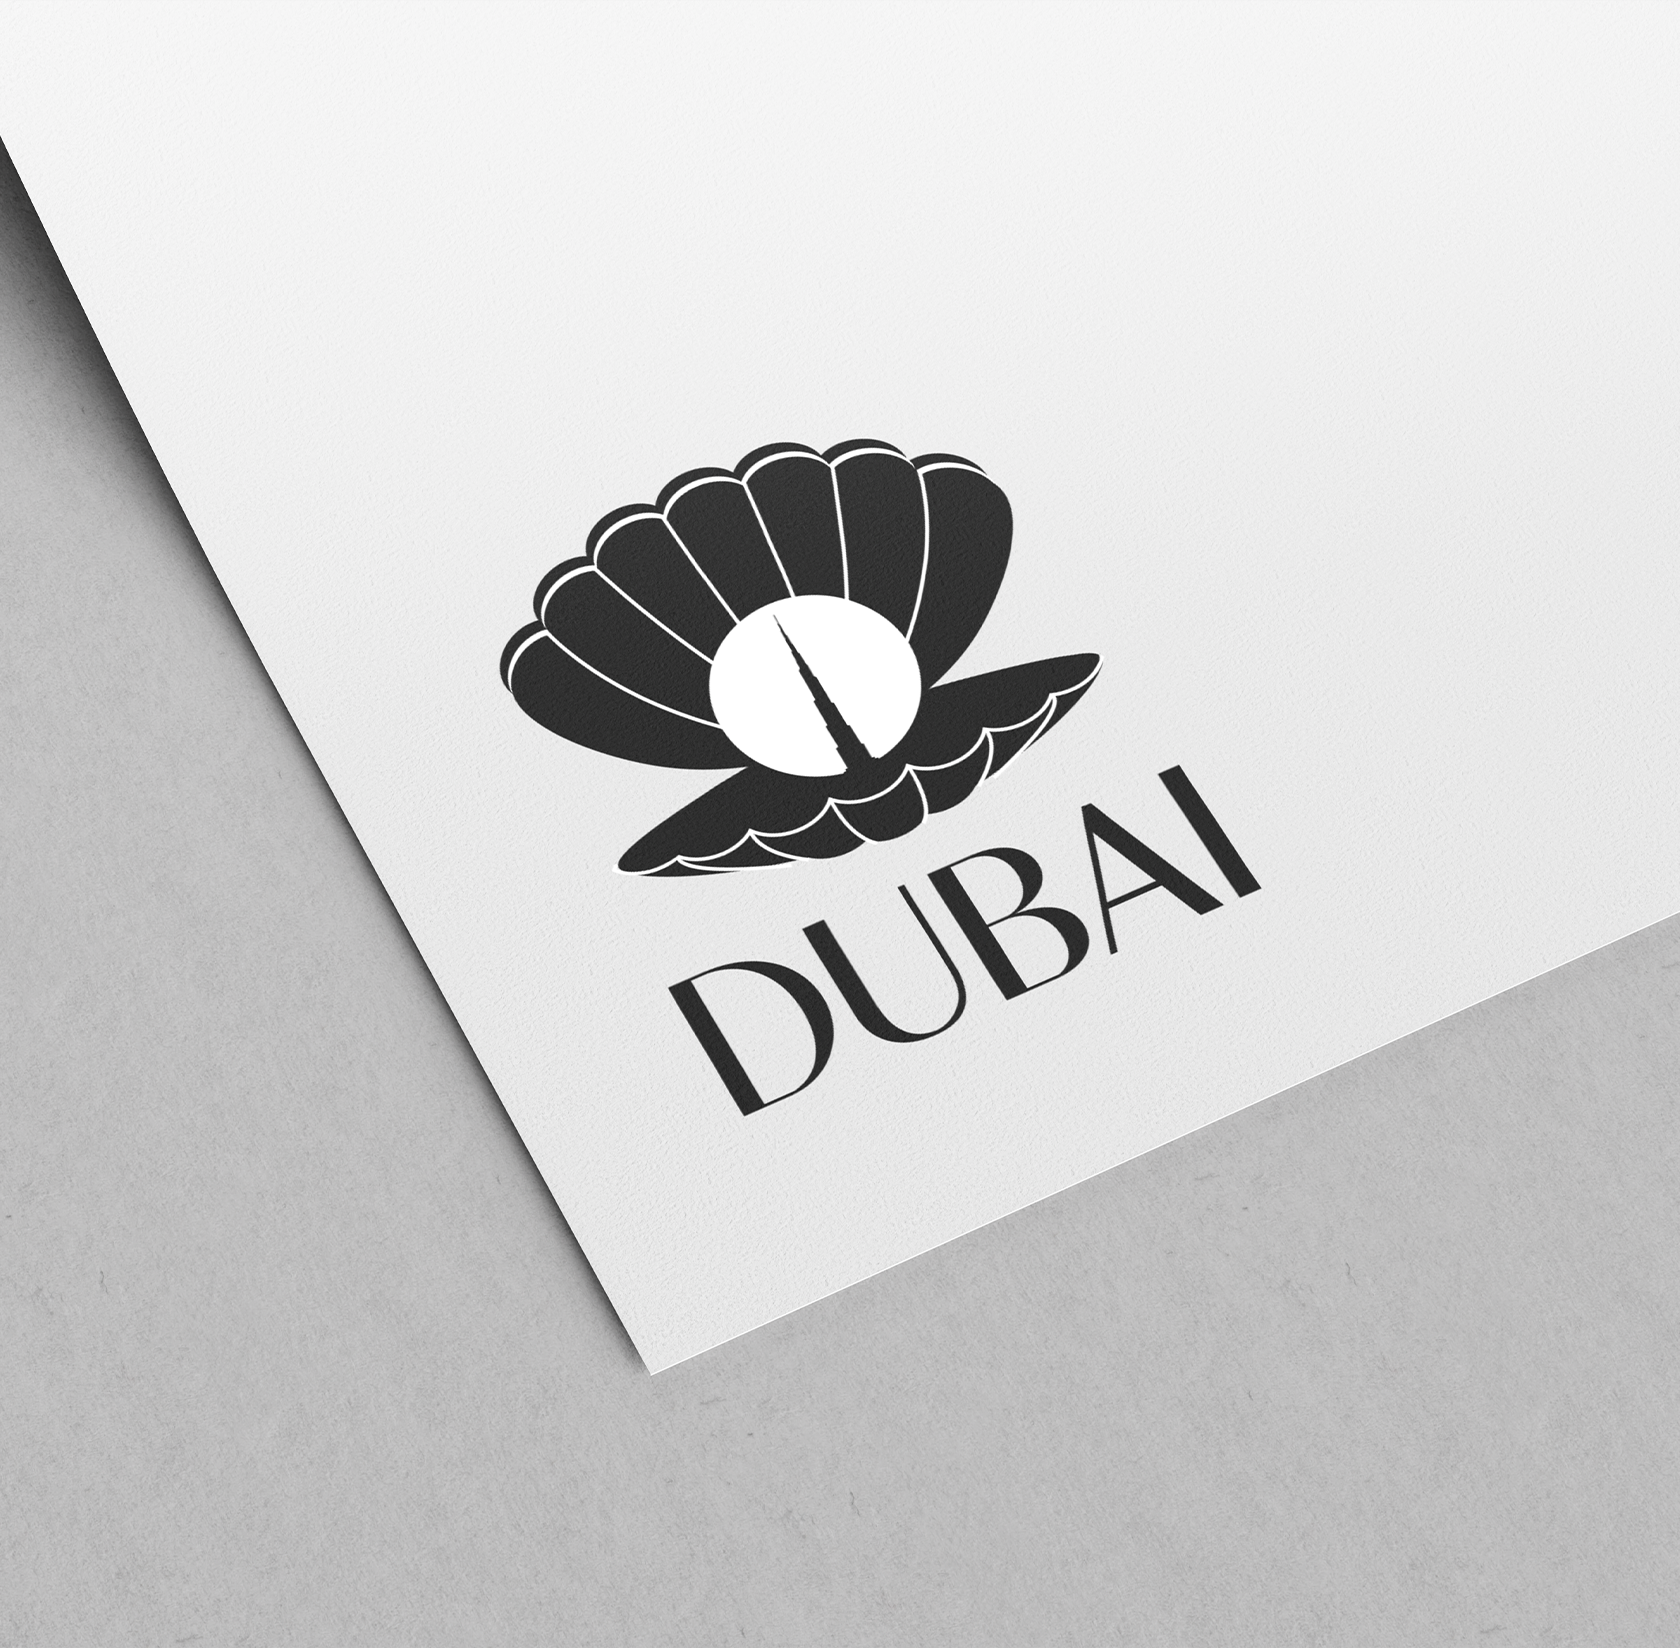 Dubai stamped paper with Tourism logo